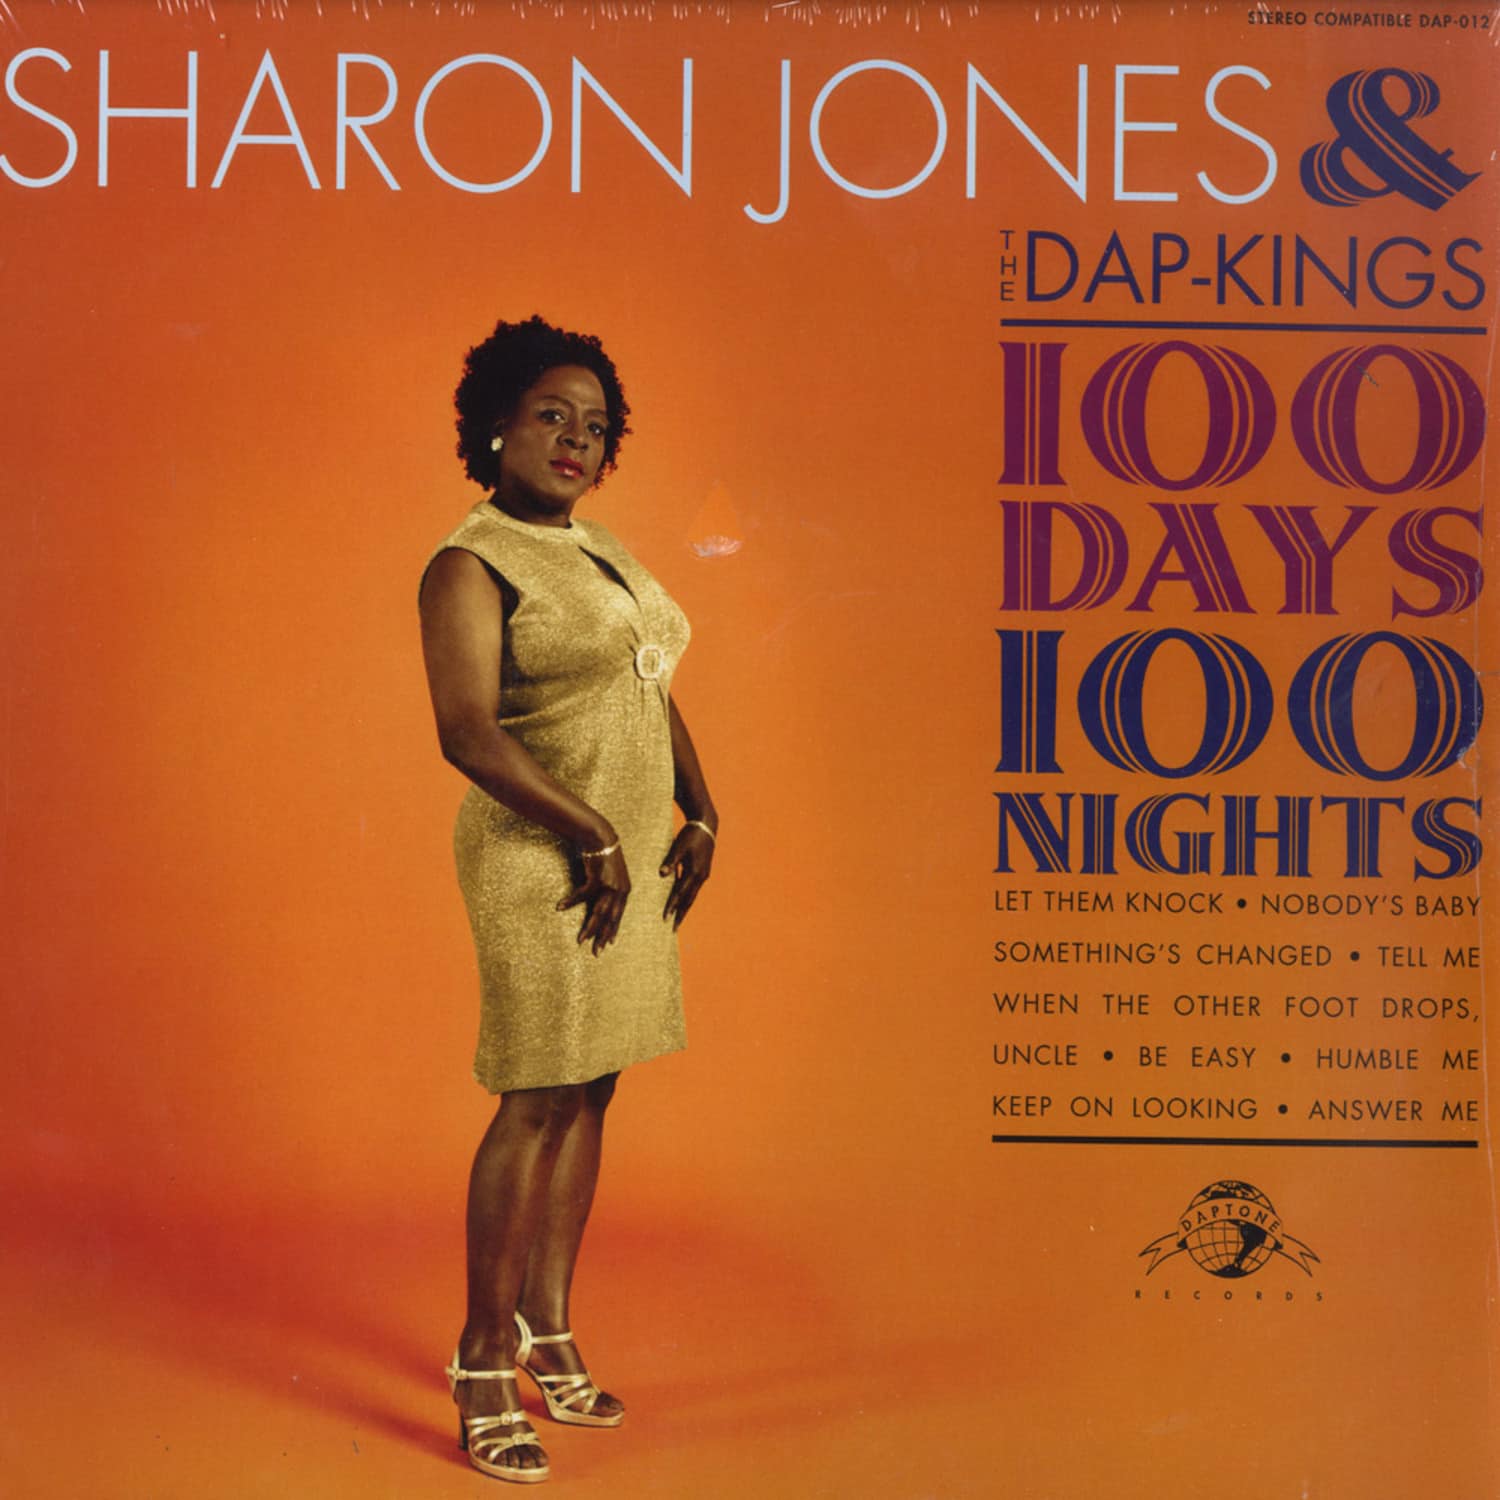 Sharon Jones & The Dap Kings - 100 DAYS, 100 NIGHTS 